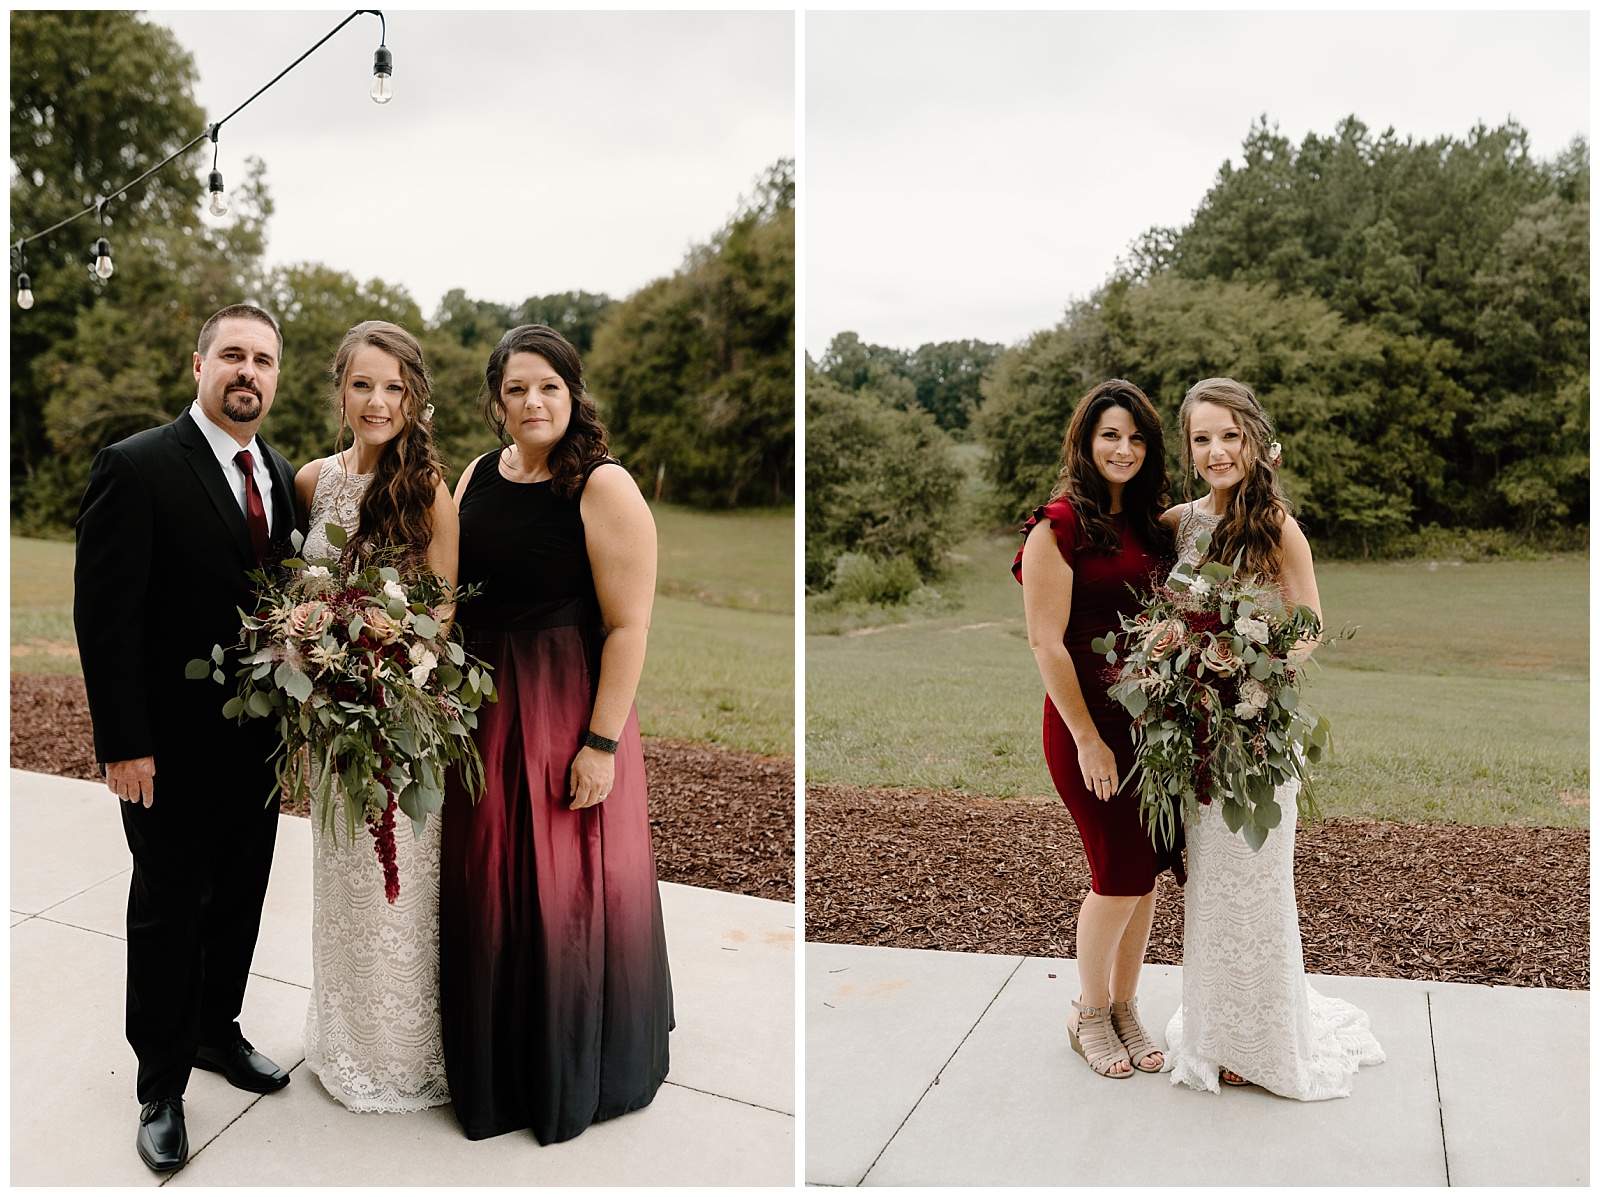 family portraits taken at a North Carolina wedding by photographer Kali LaFon